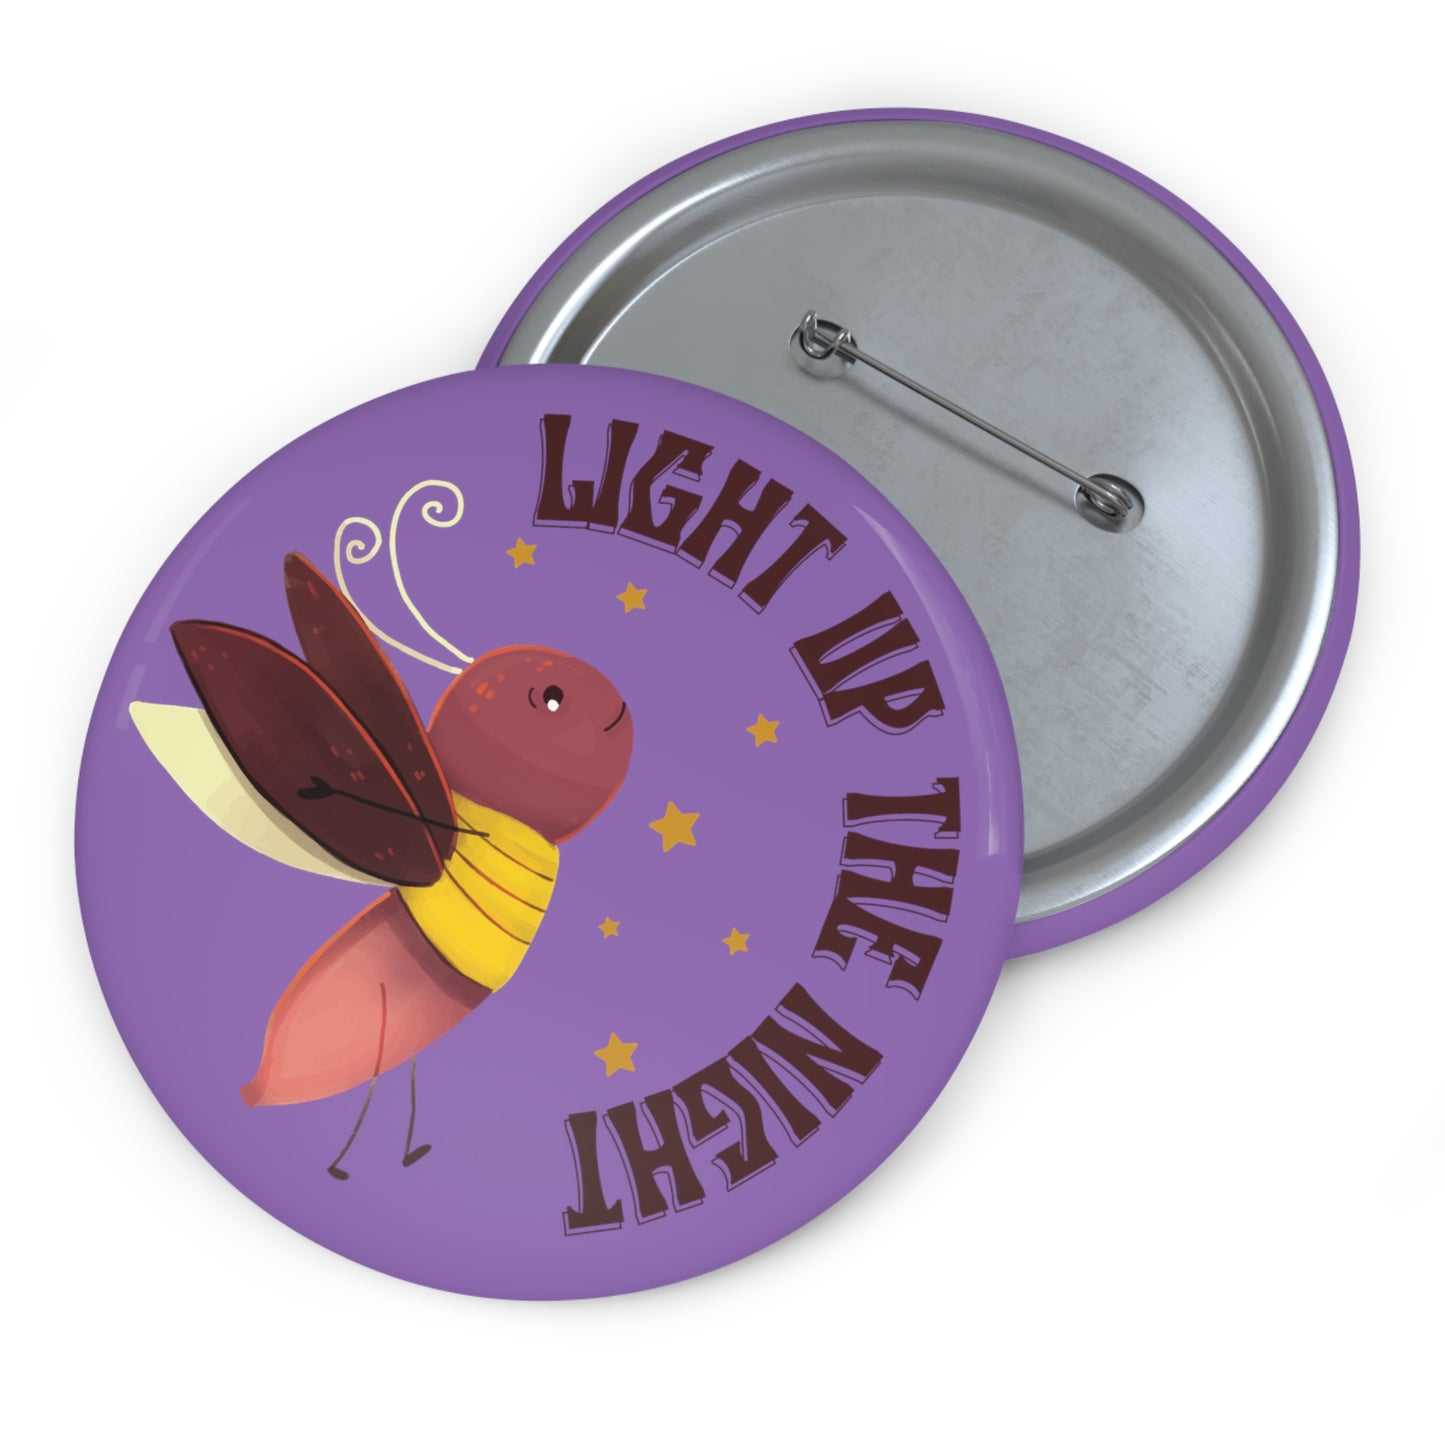 Custom Pin Buttons - Light Up the Night